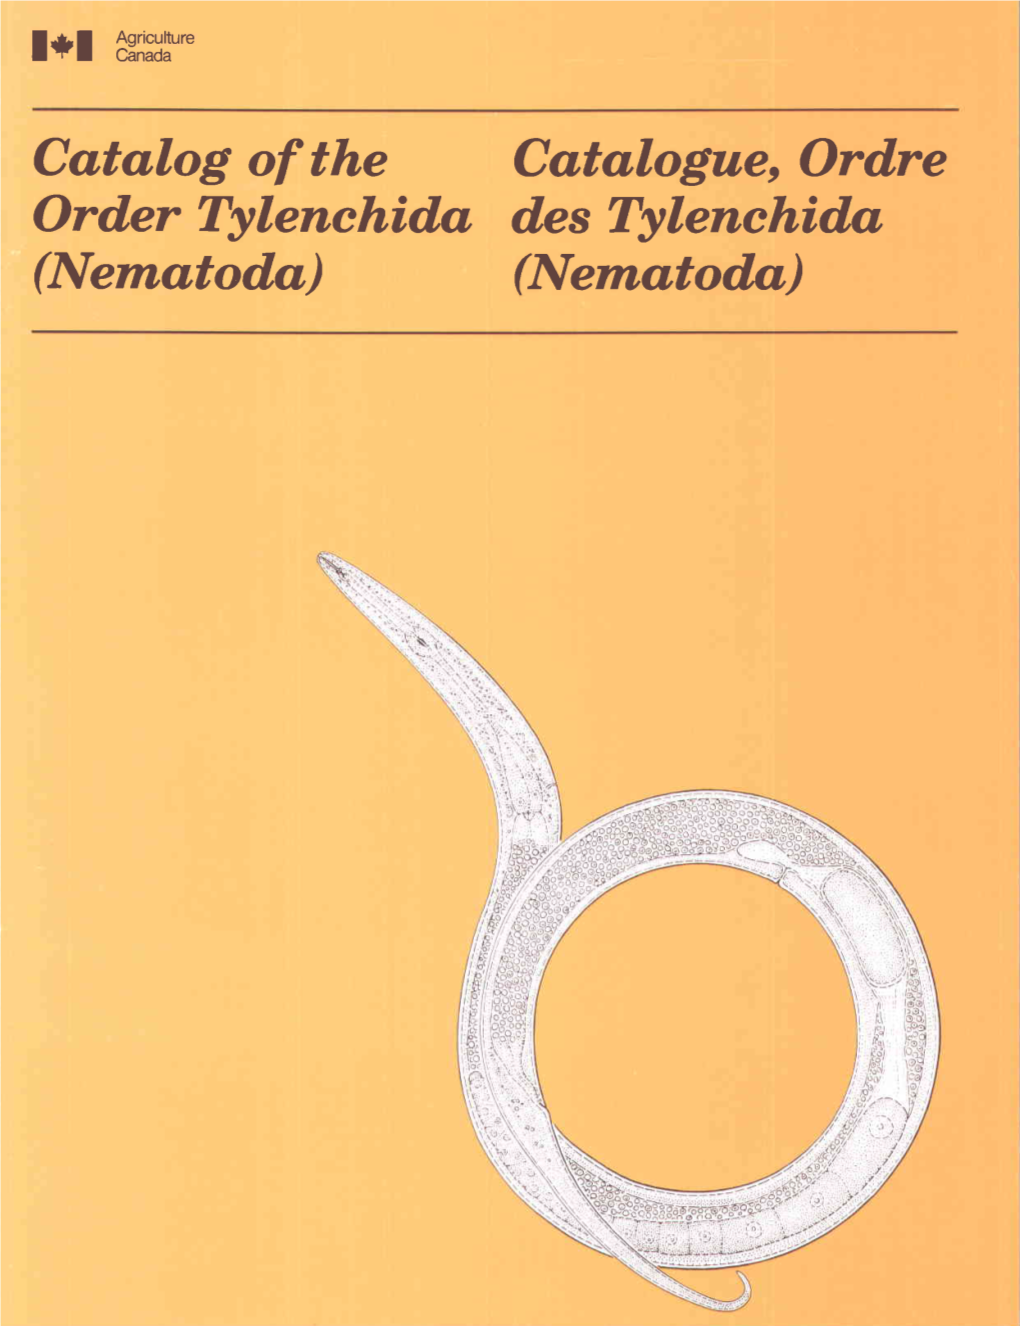 AAFC Catalog of Order Tylenchi